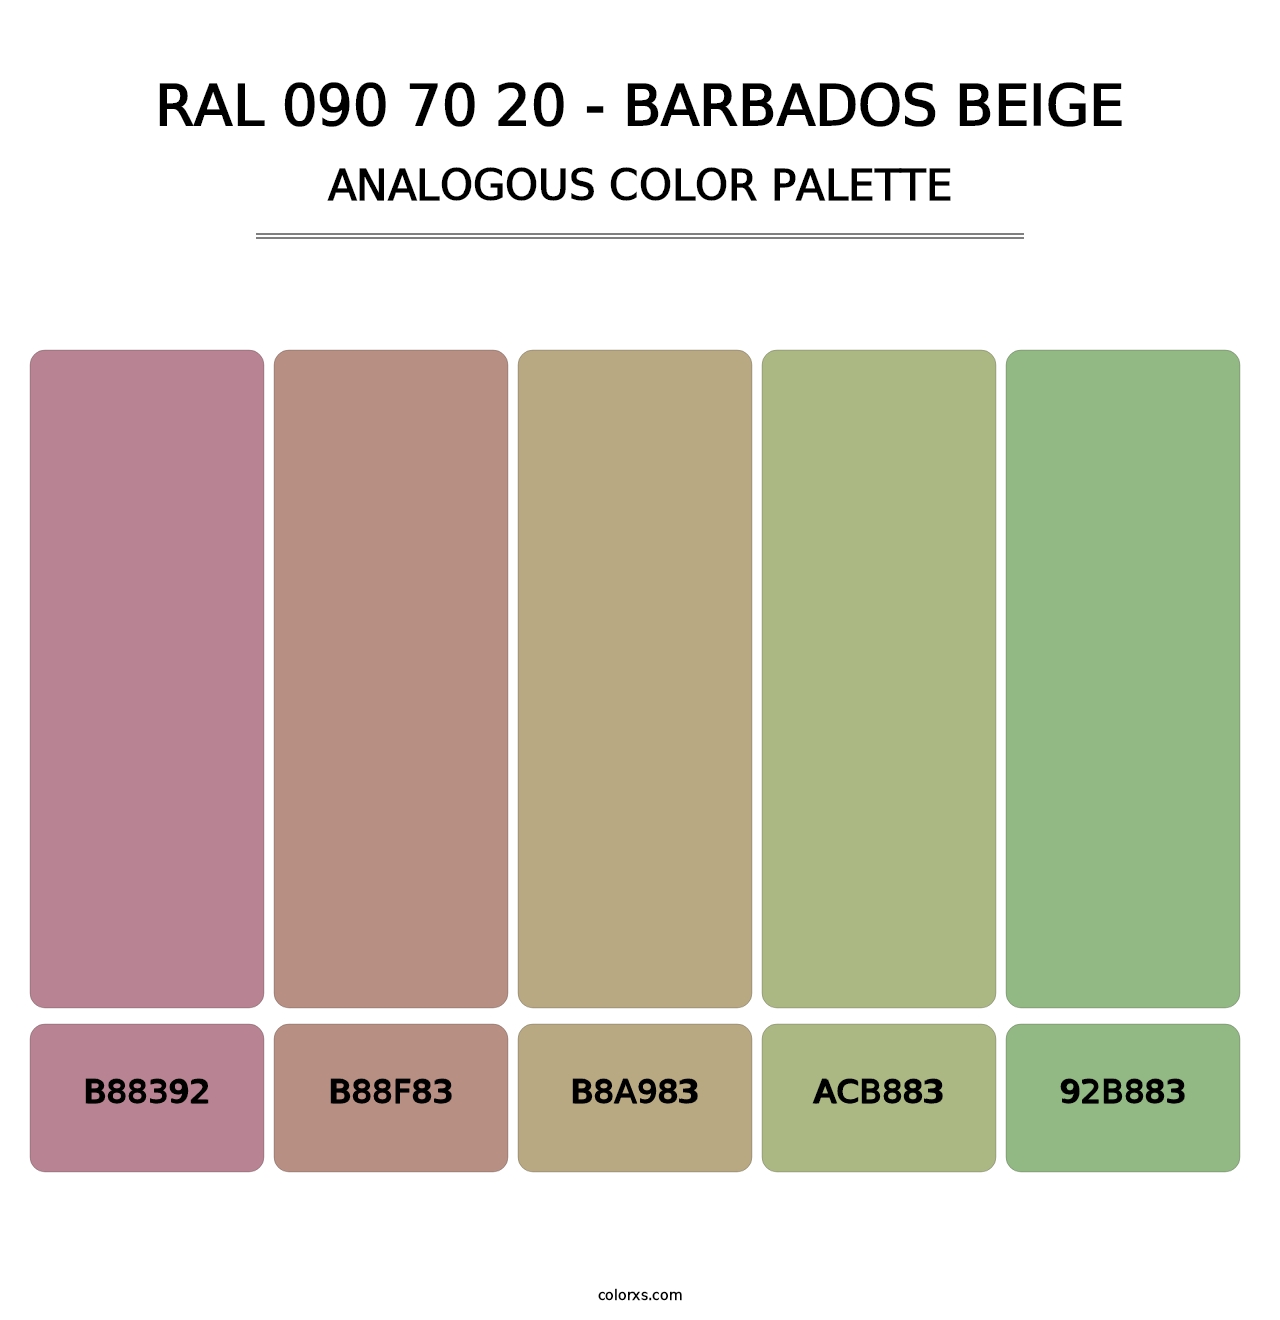 RAL 090 70 20 - Barbados Beige - Analogous Color Palette